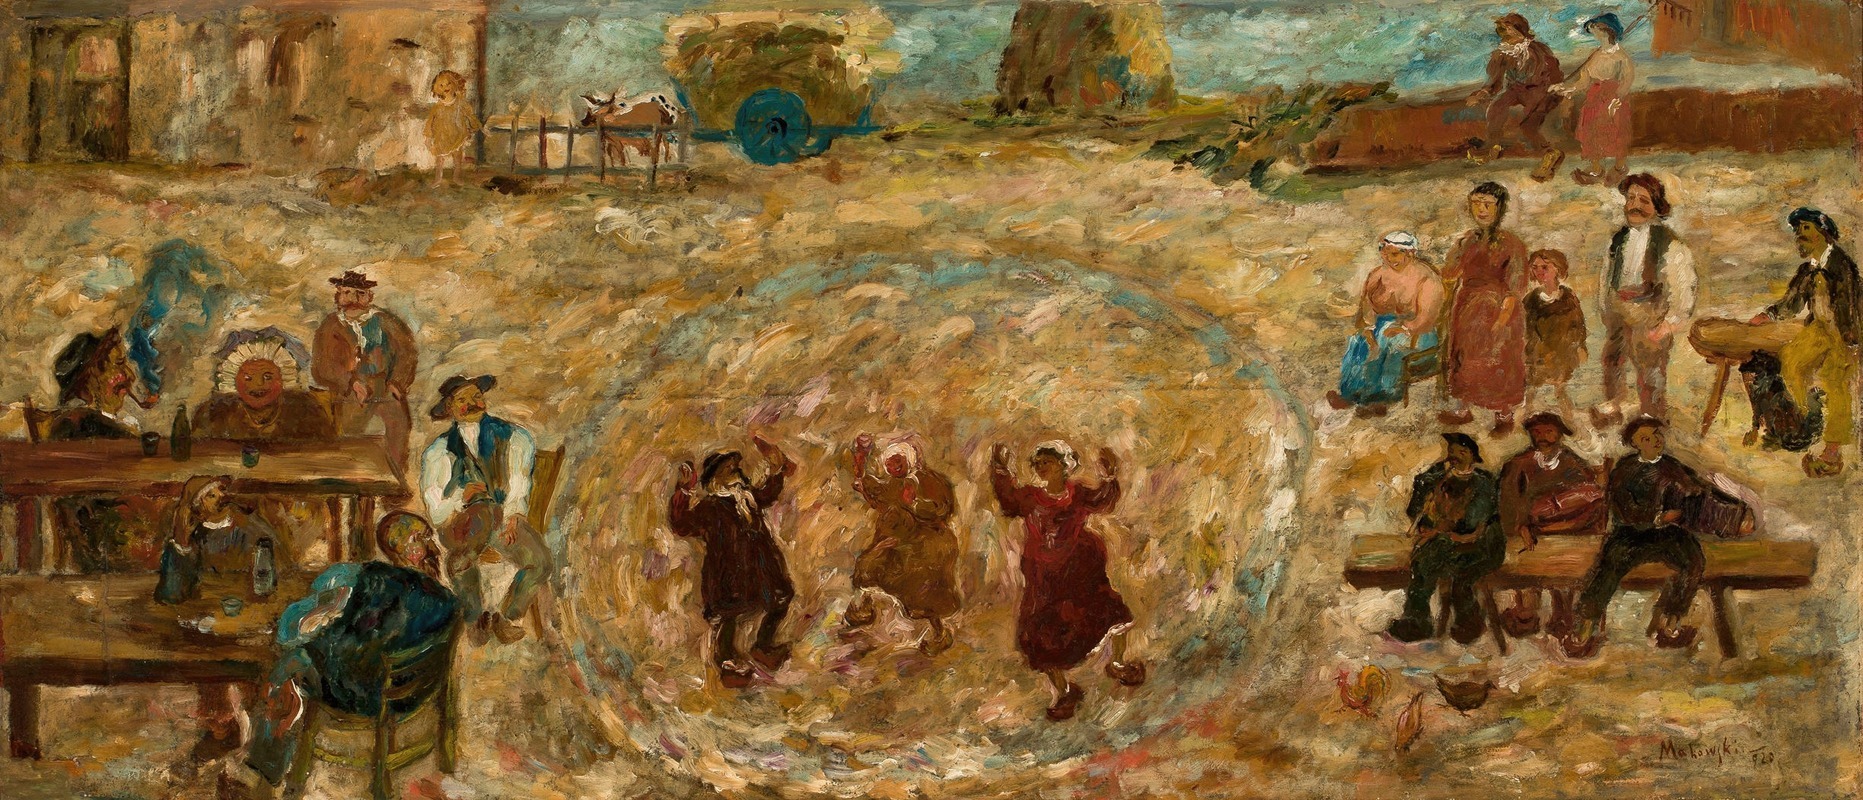 Tadeusz Makowski - Play in a village